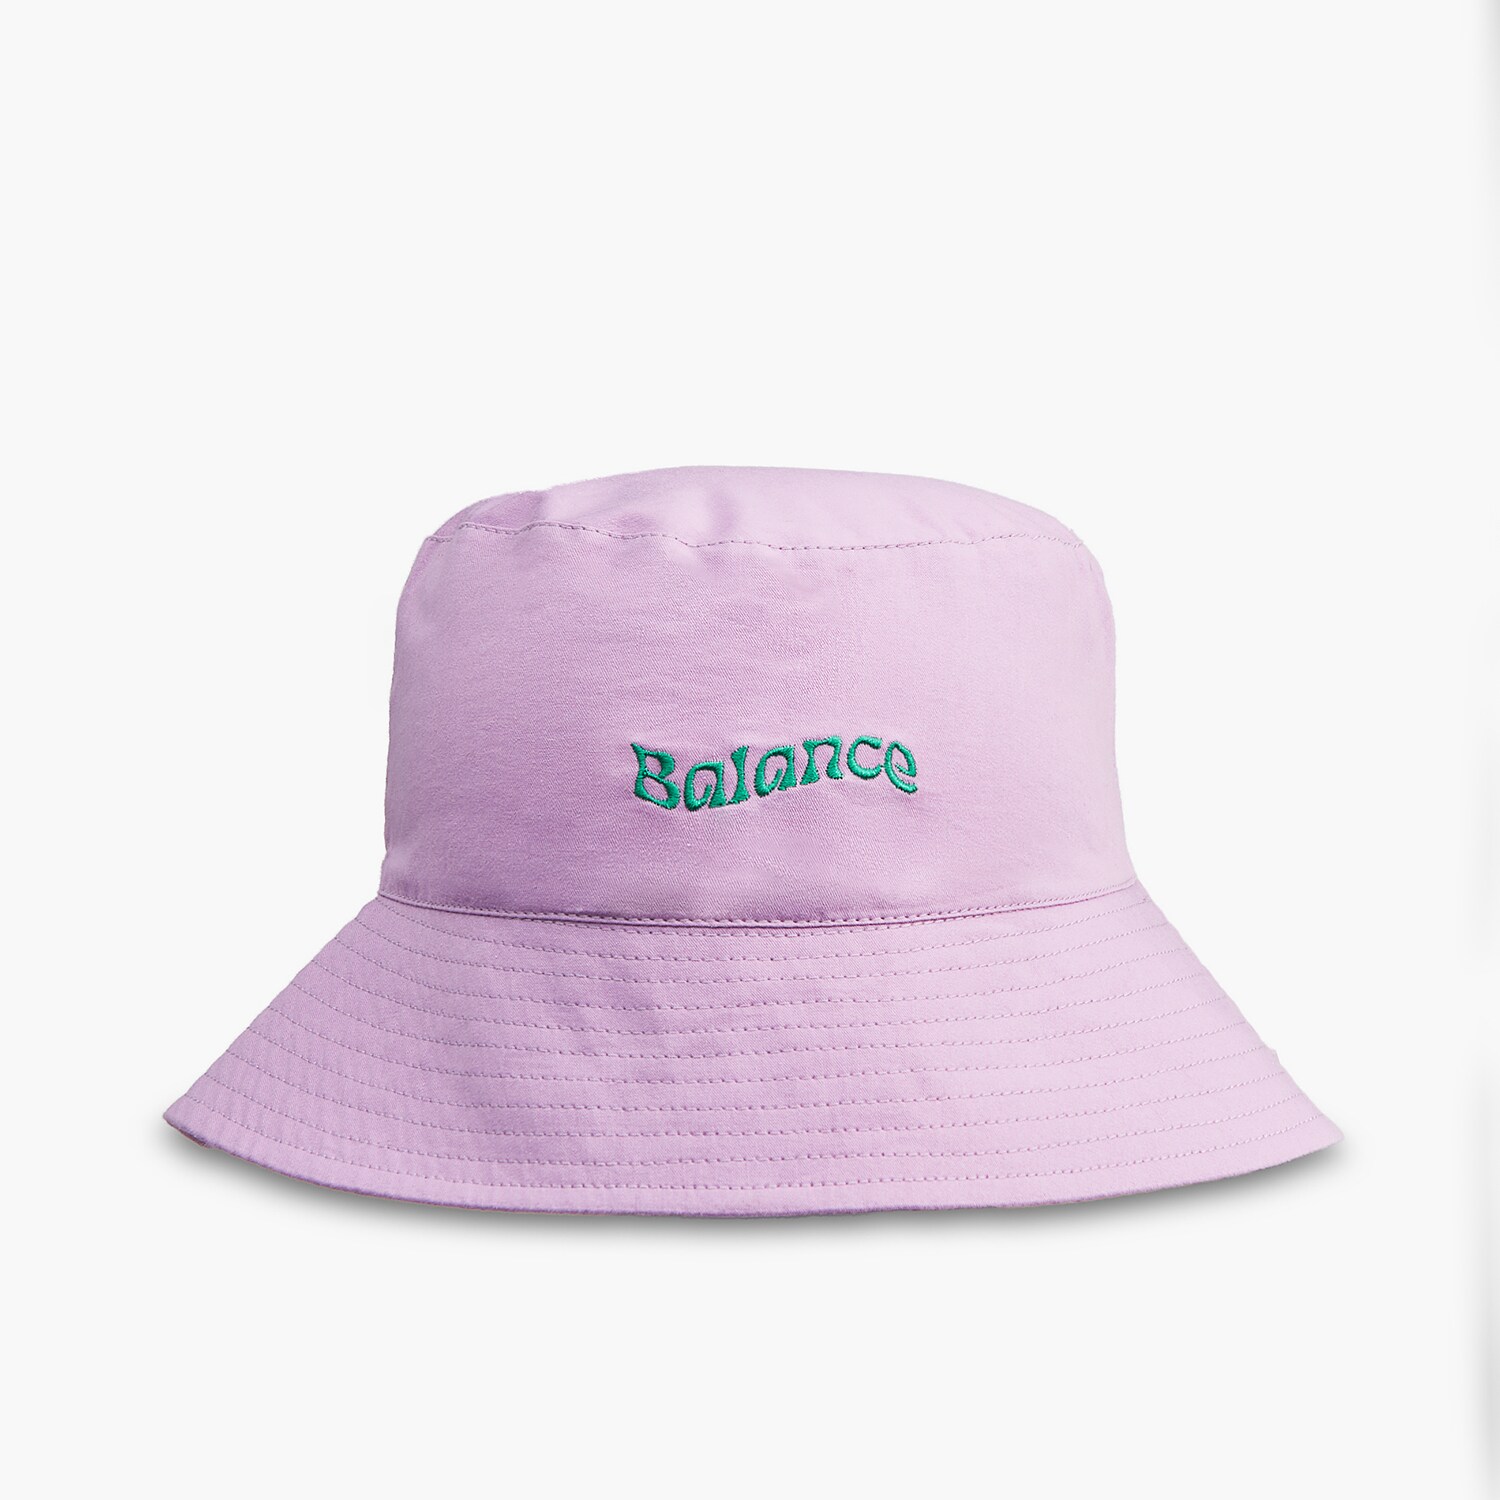 E-shop Cropp - Klobúk bucket hat s nápisom - Ružová